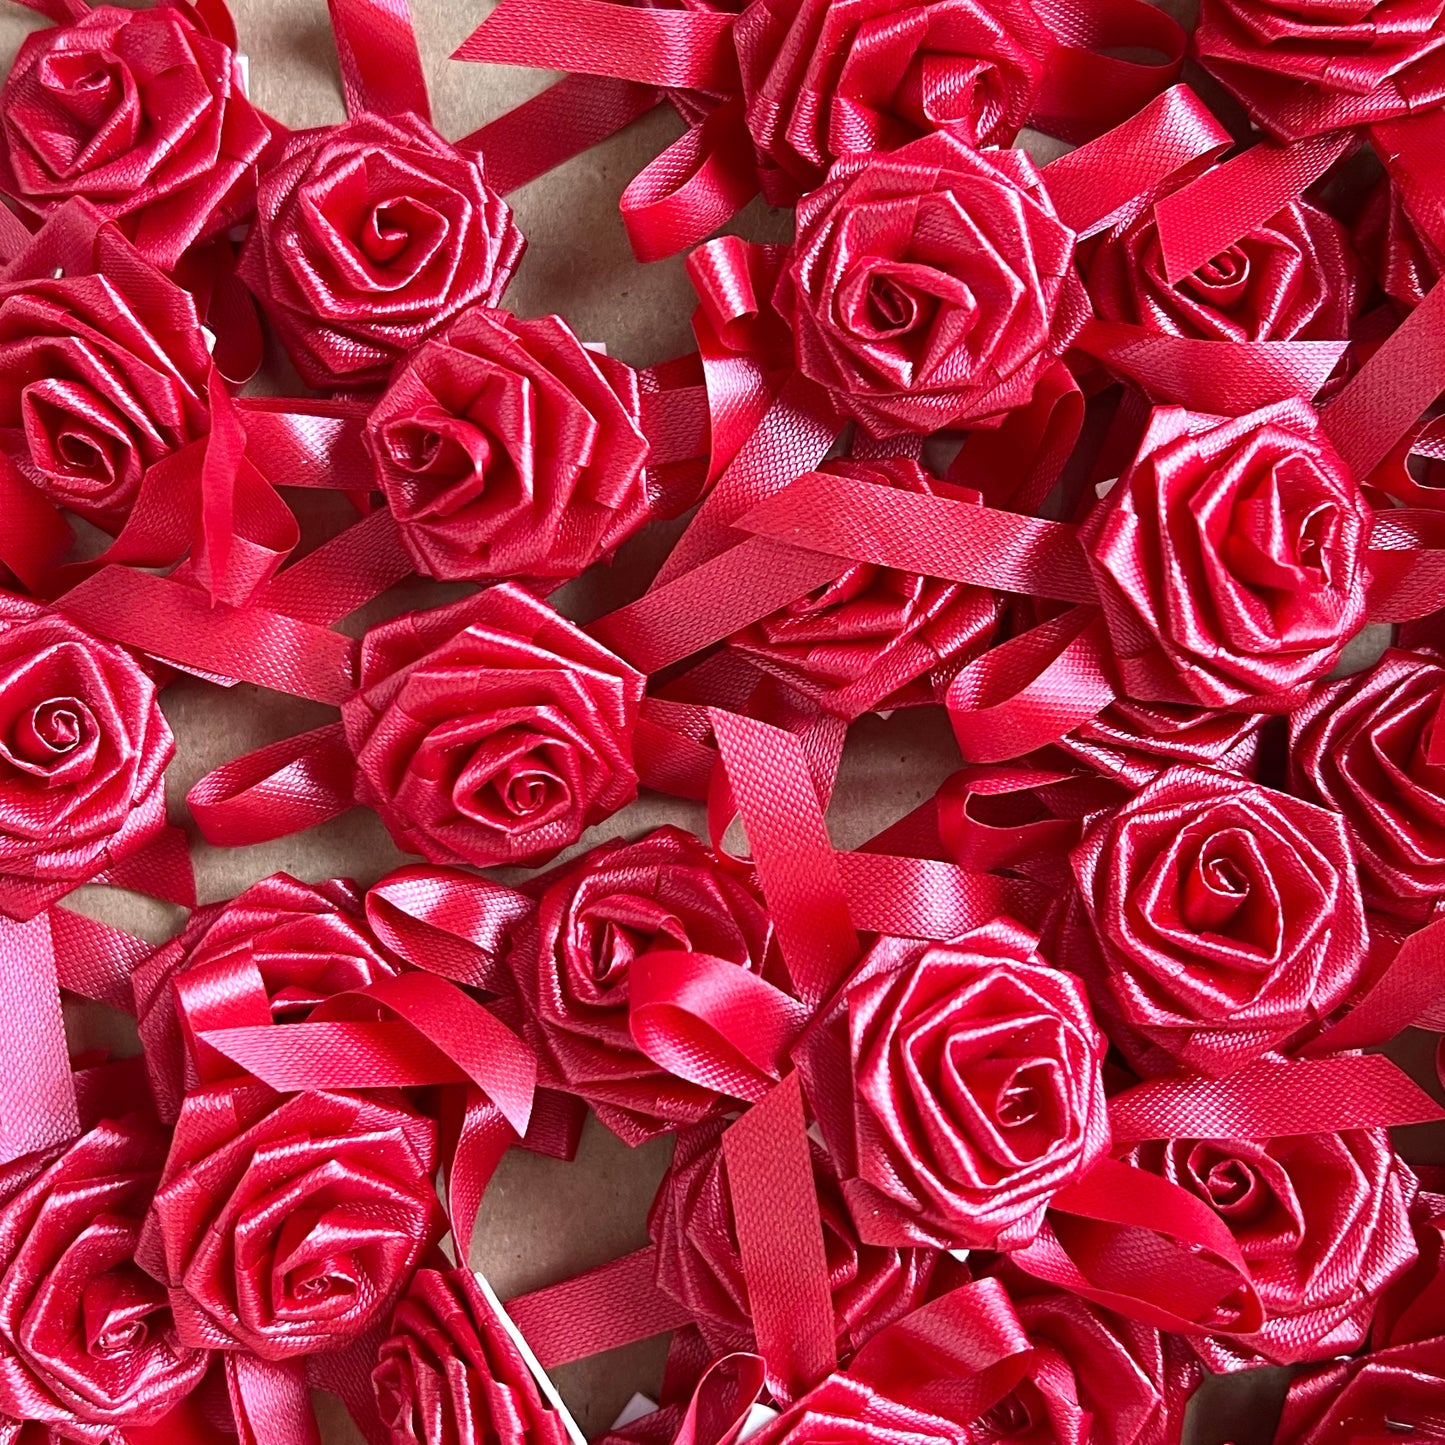 Rolled Ribbon Roses - Vintage